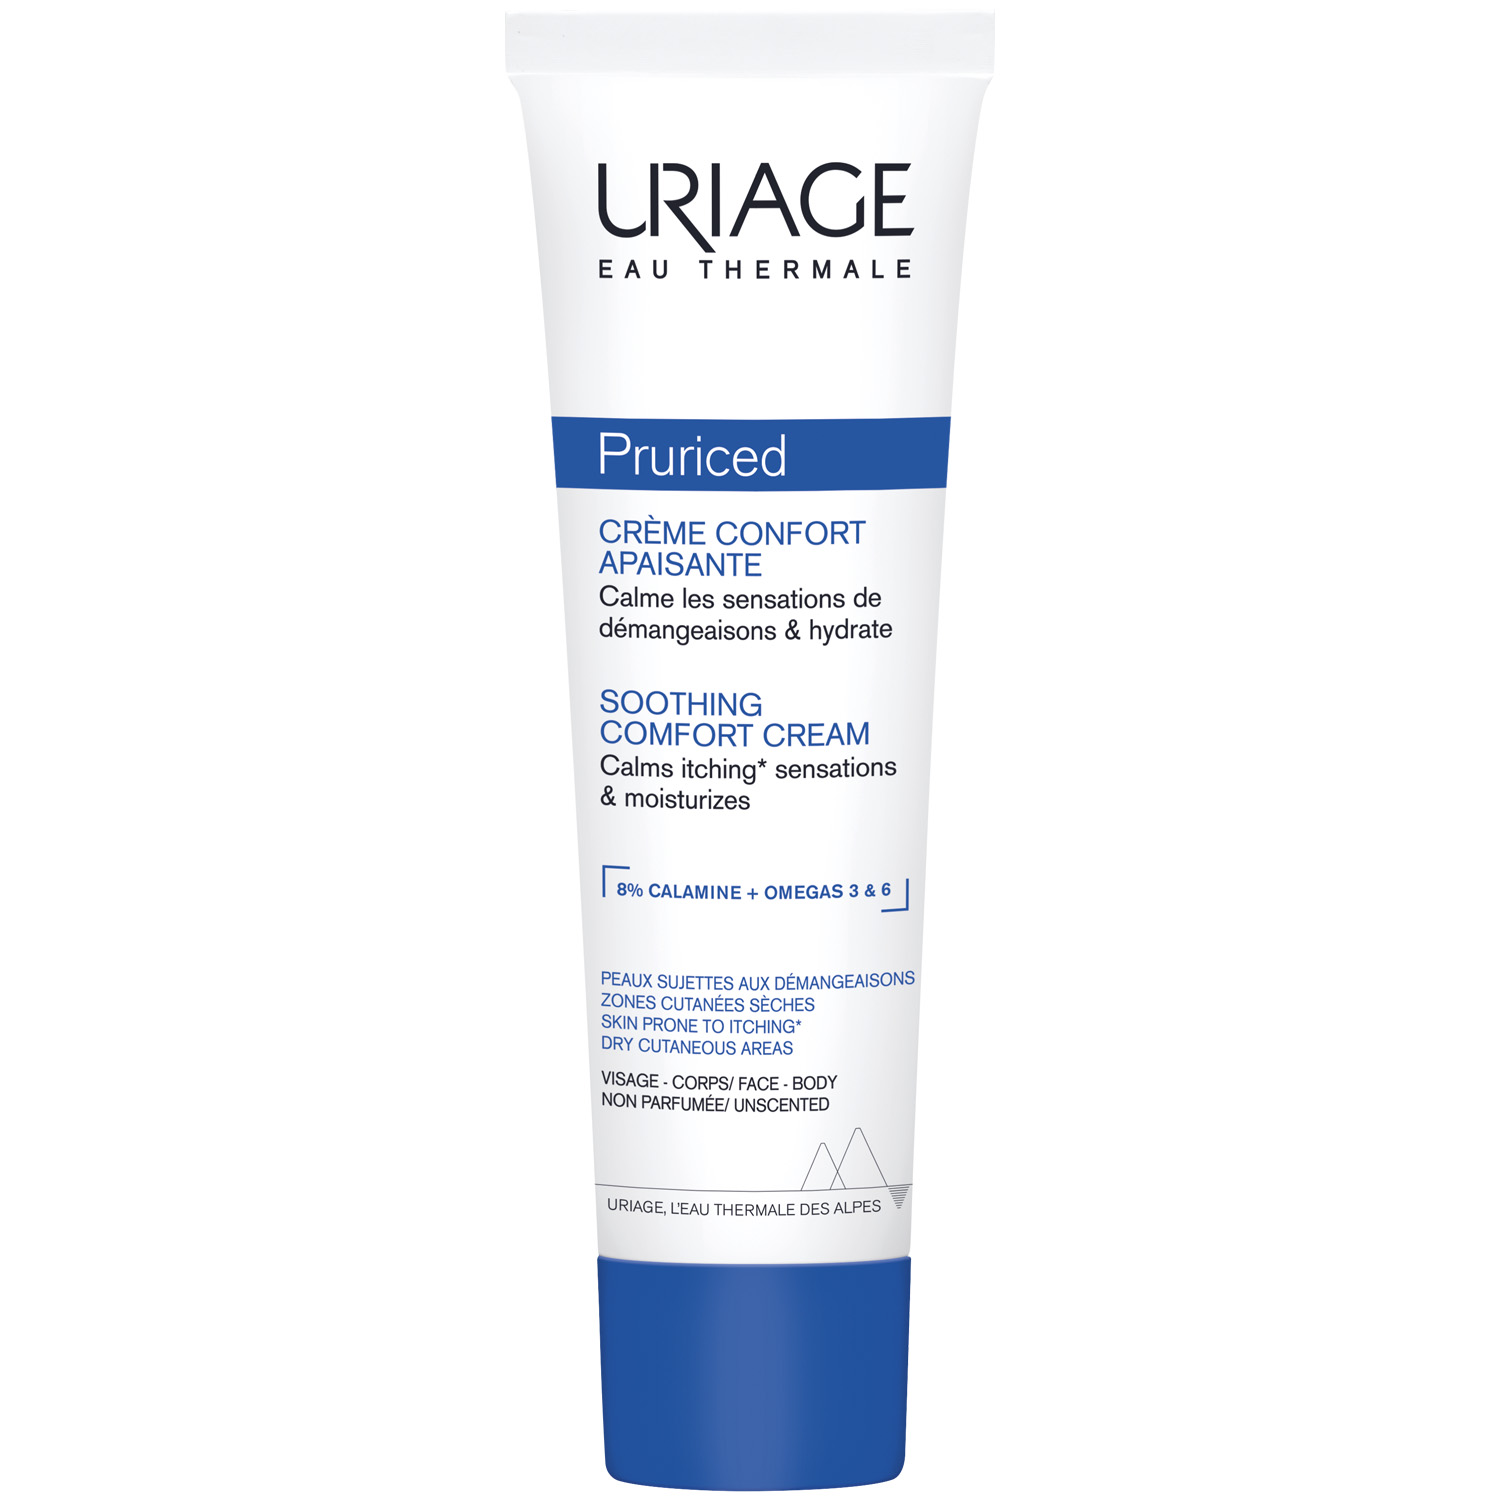 Uriage Успокаивающий крем Soothing Comfort Cream, 100 мл (Uriage, Pruriced)